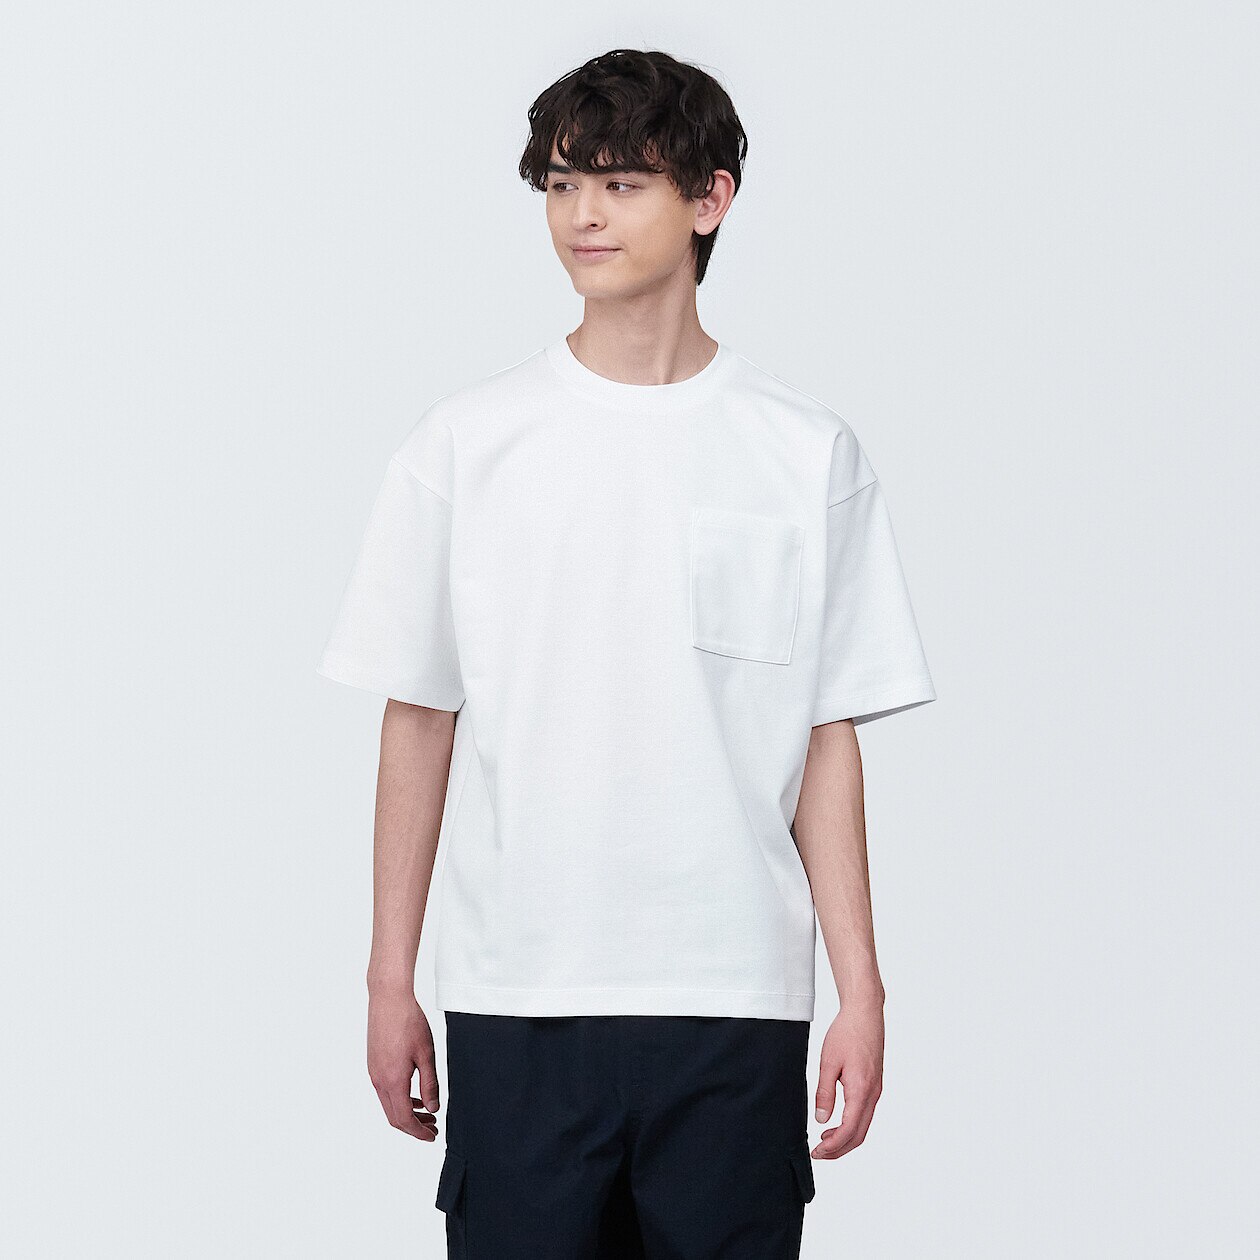 Shop Cool Touch Short Sleeve T-Shirt online | Muji UAE